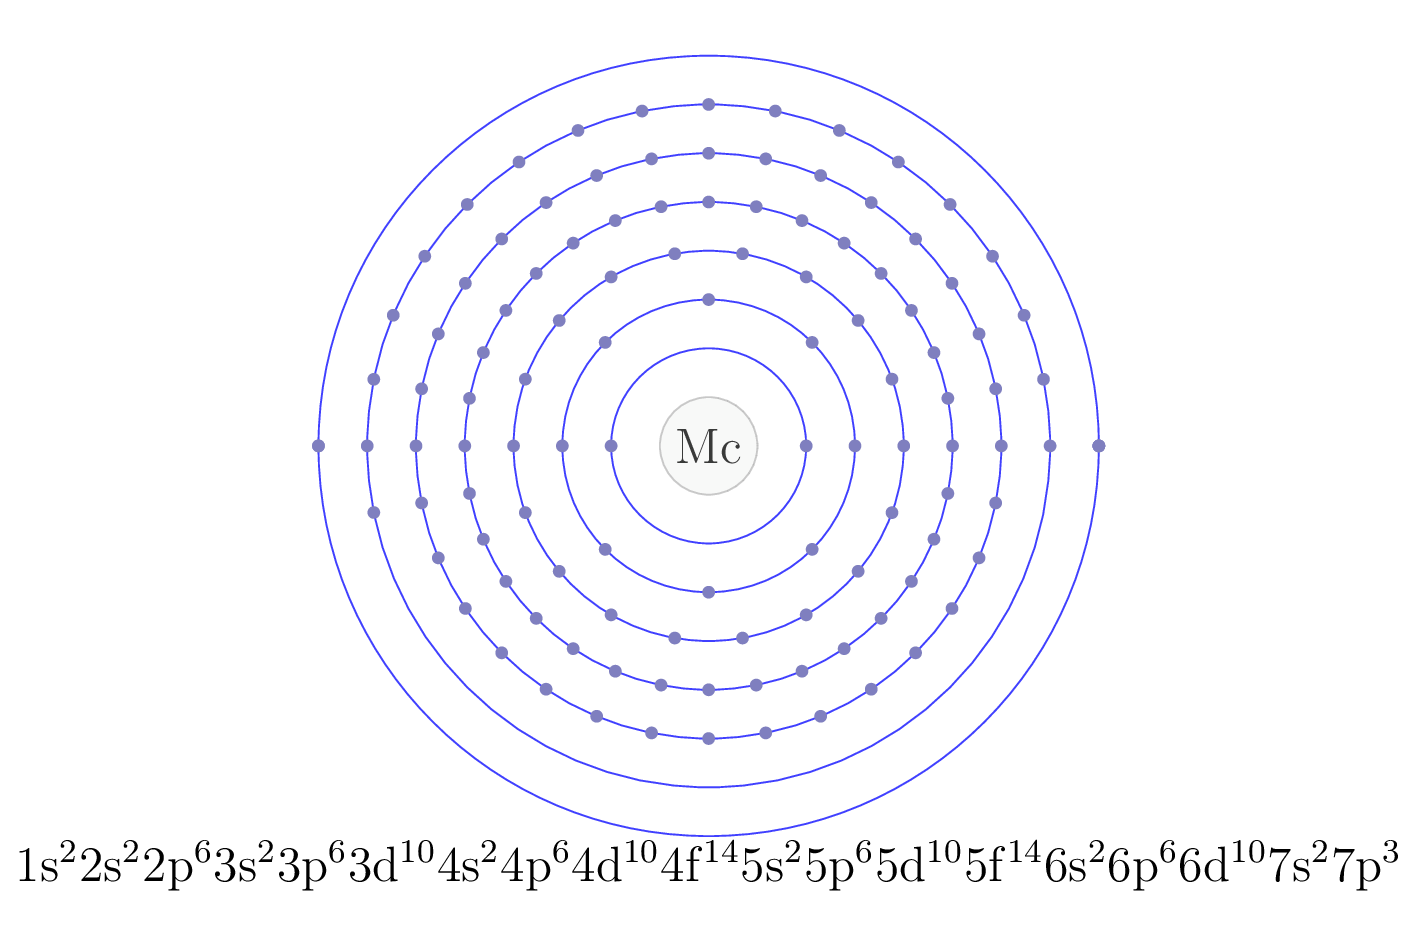 electron configuration of element Mc